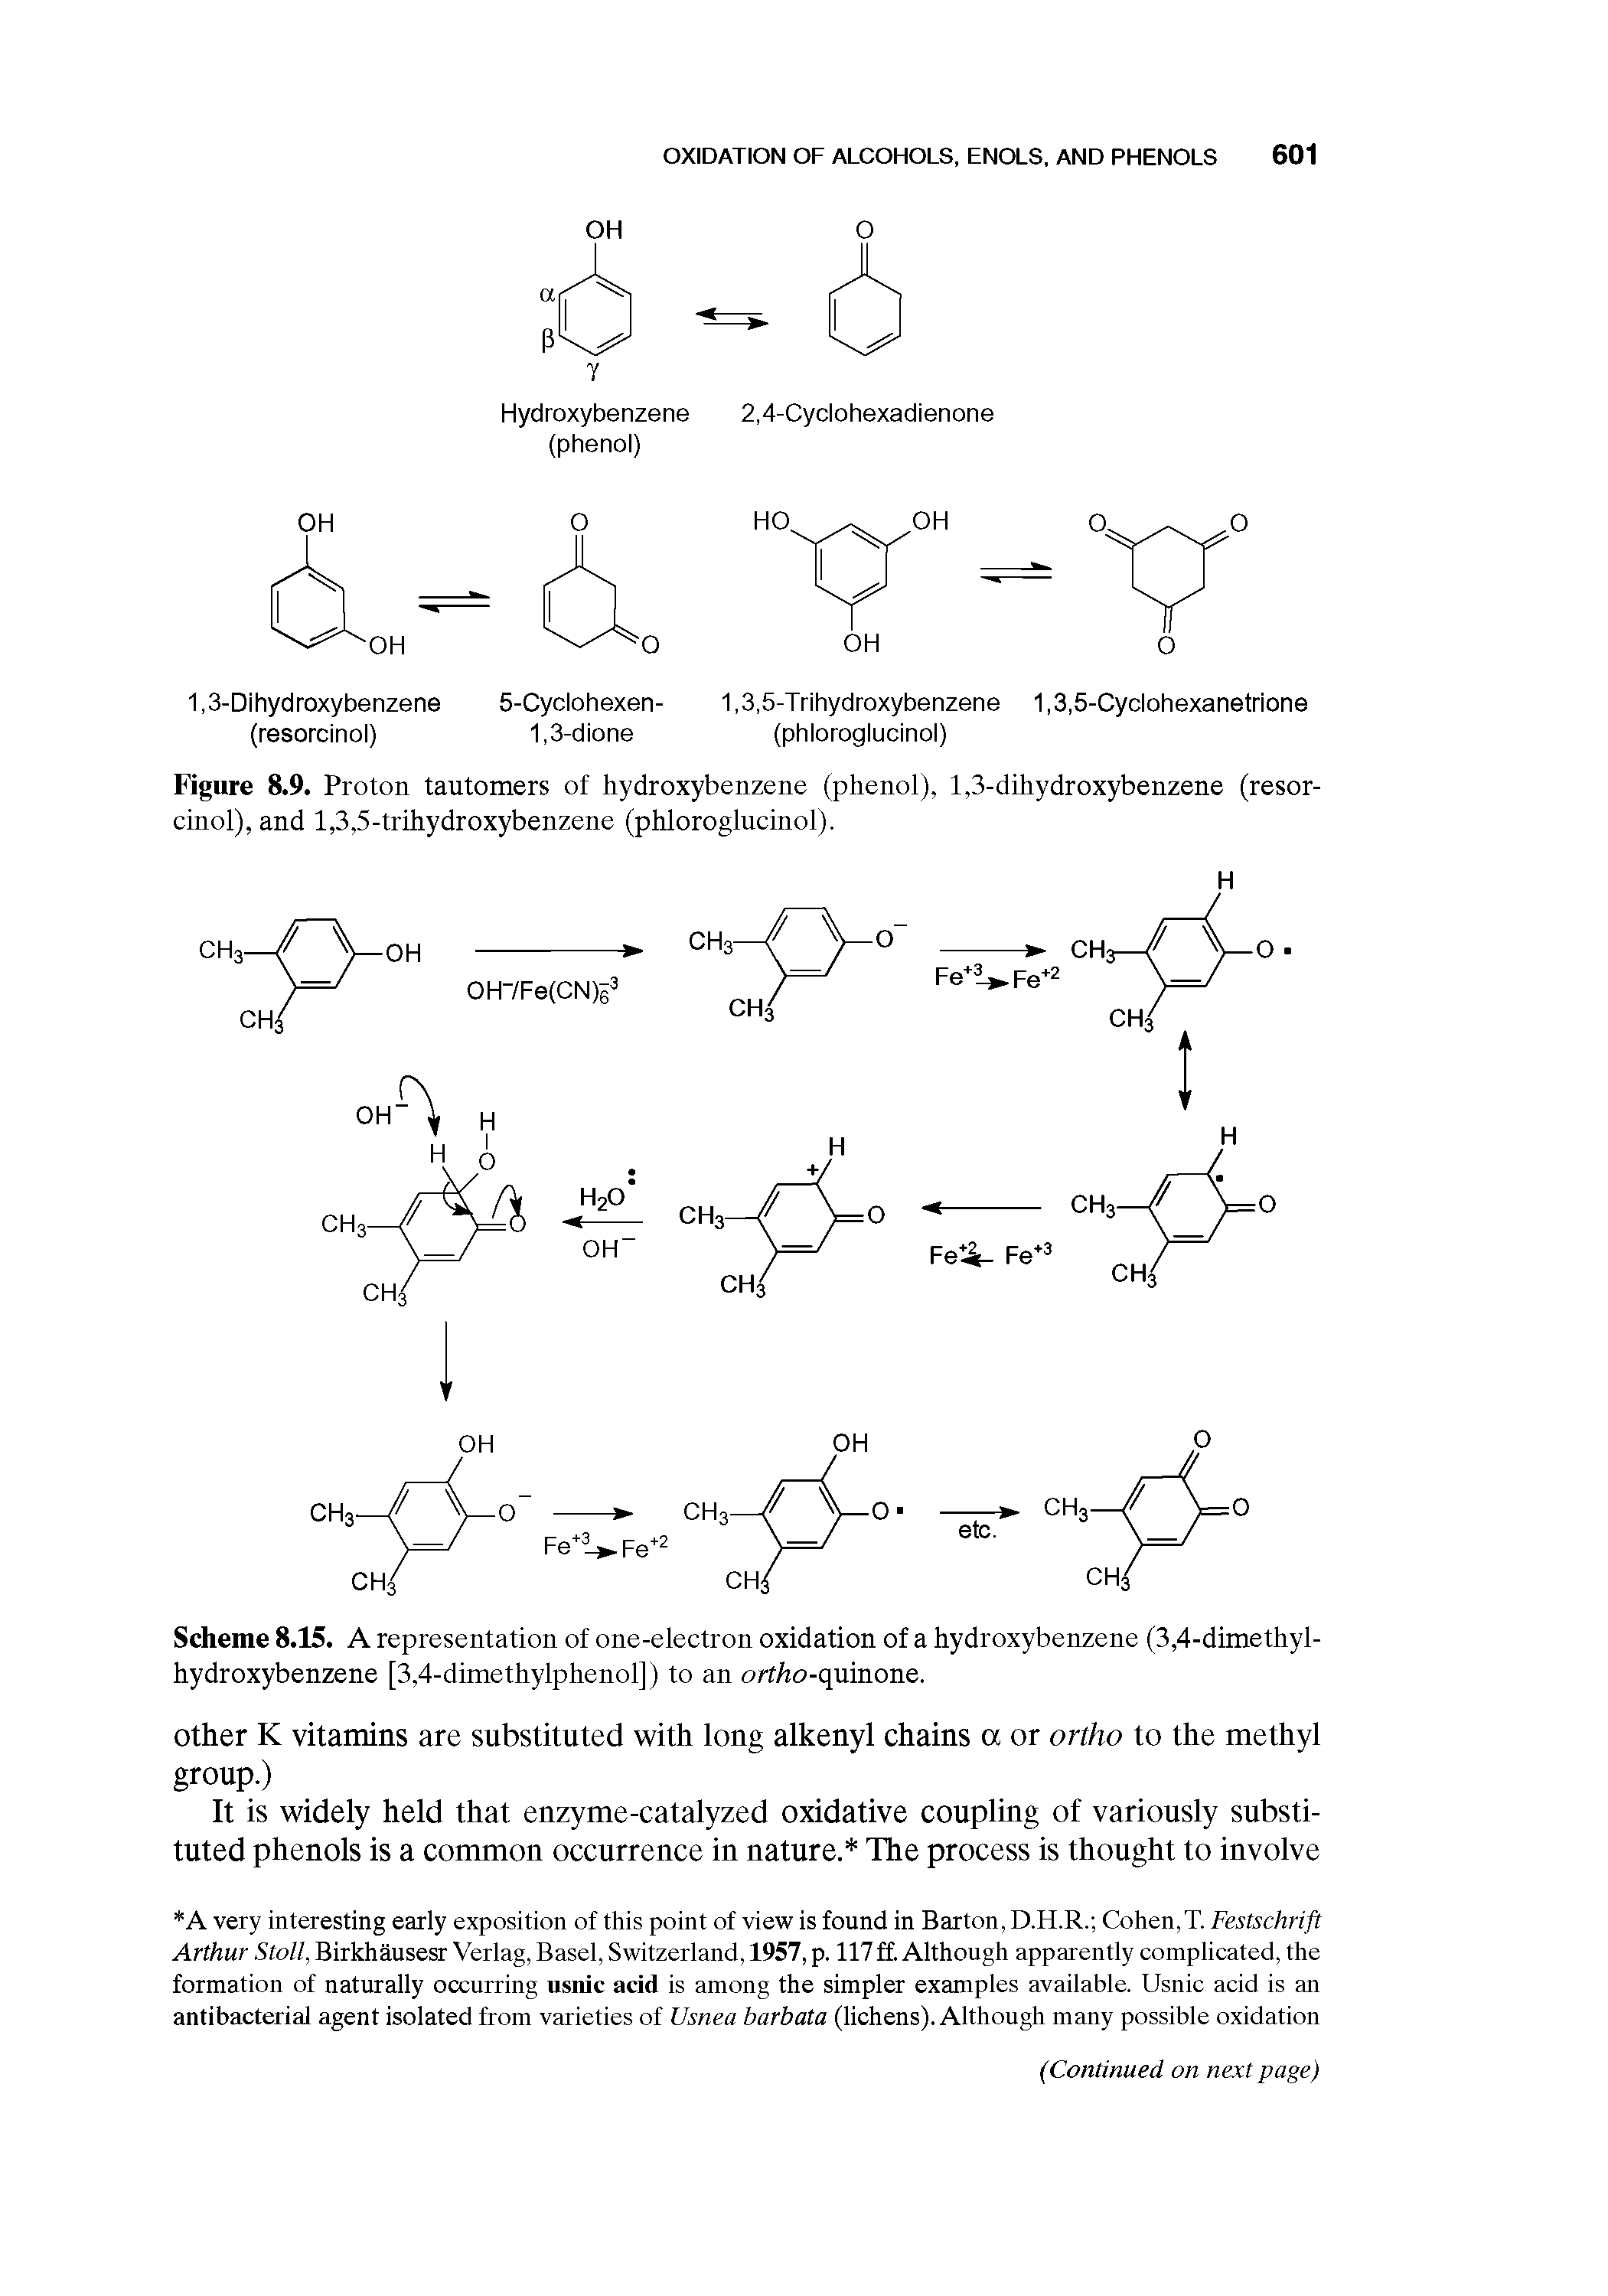 Figure 8.9. Proton tautomers of hydroxybenzene (phenol), 1,3-dihydroxybenzene (resorcinol), and 1,3,5-trihydroxybenzene (phloroglucinol).